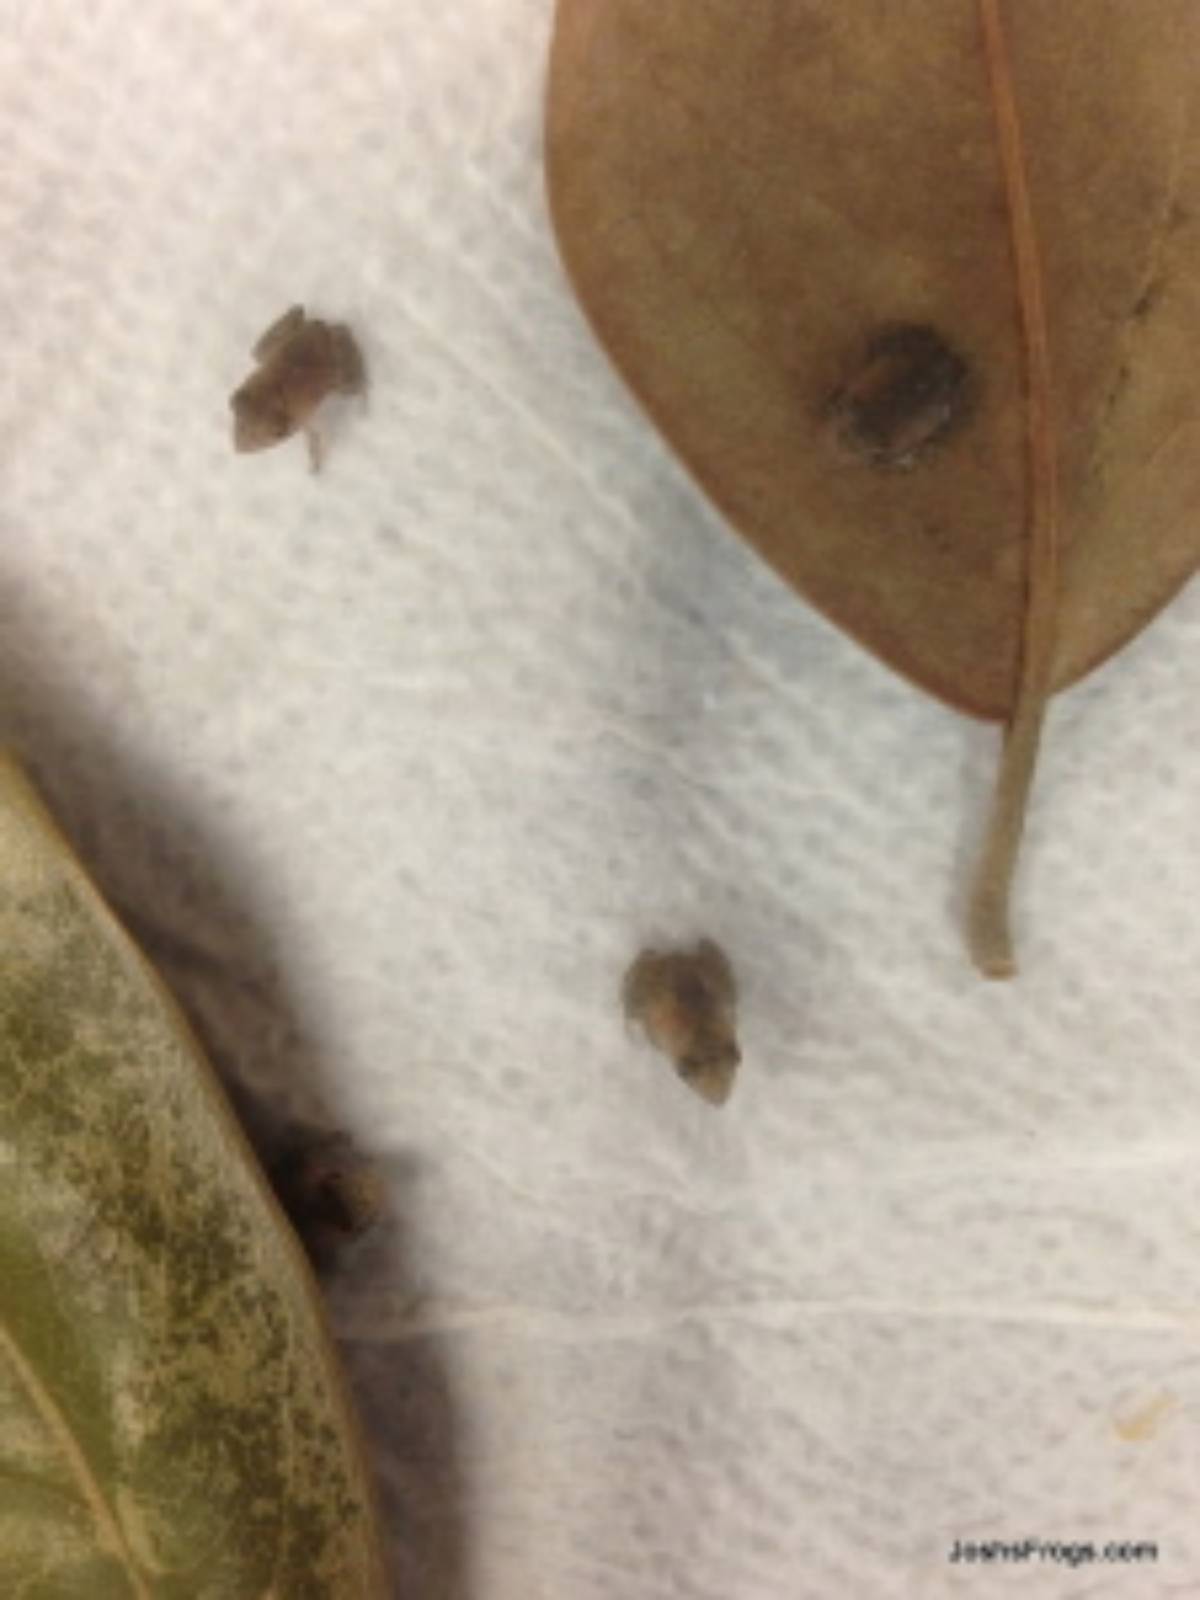 solomon island leaf frog ceratobatrachus guentheri joshs frogs solomon island leaf frogs for sale newly metamorphed babies